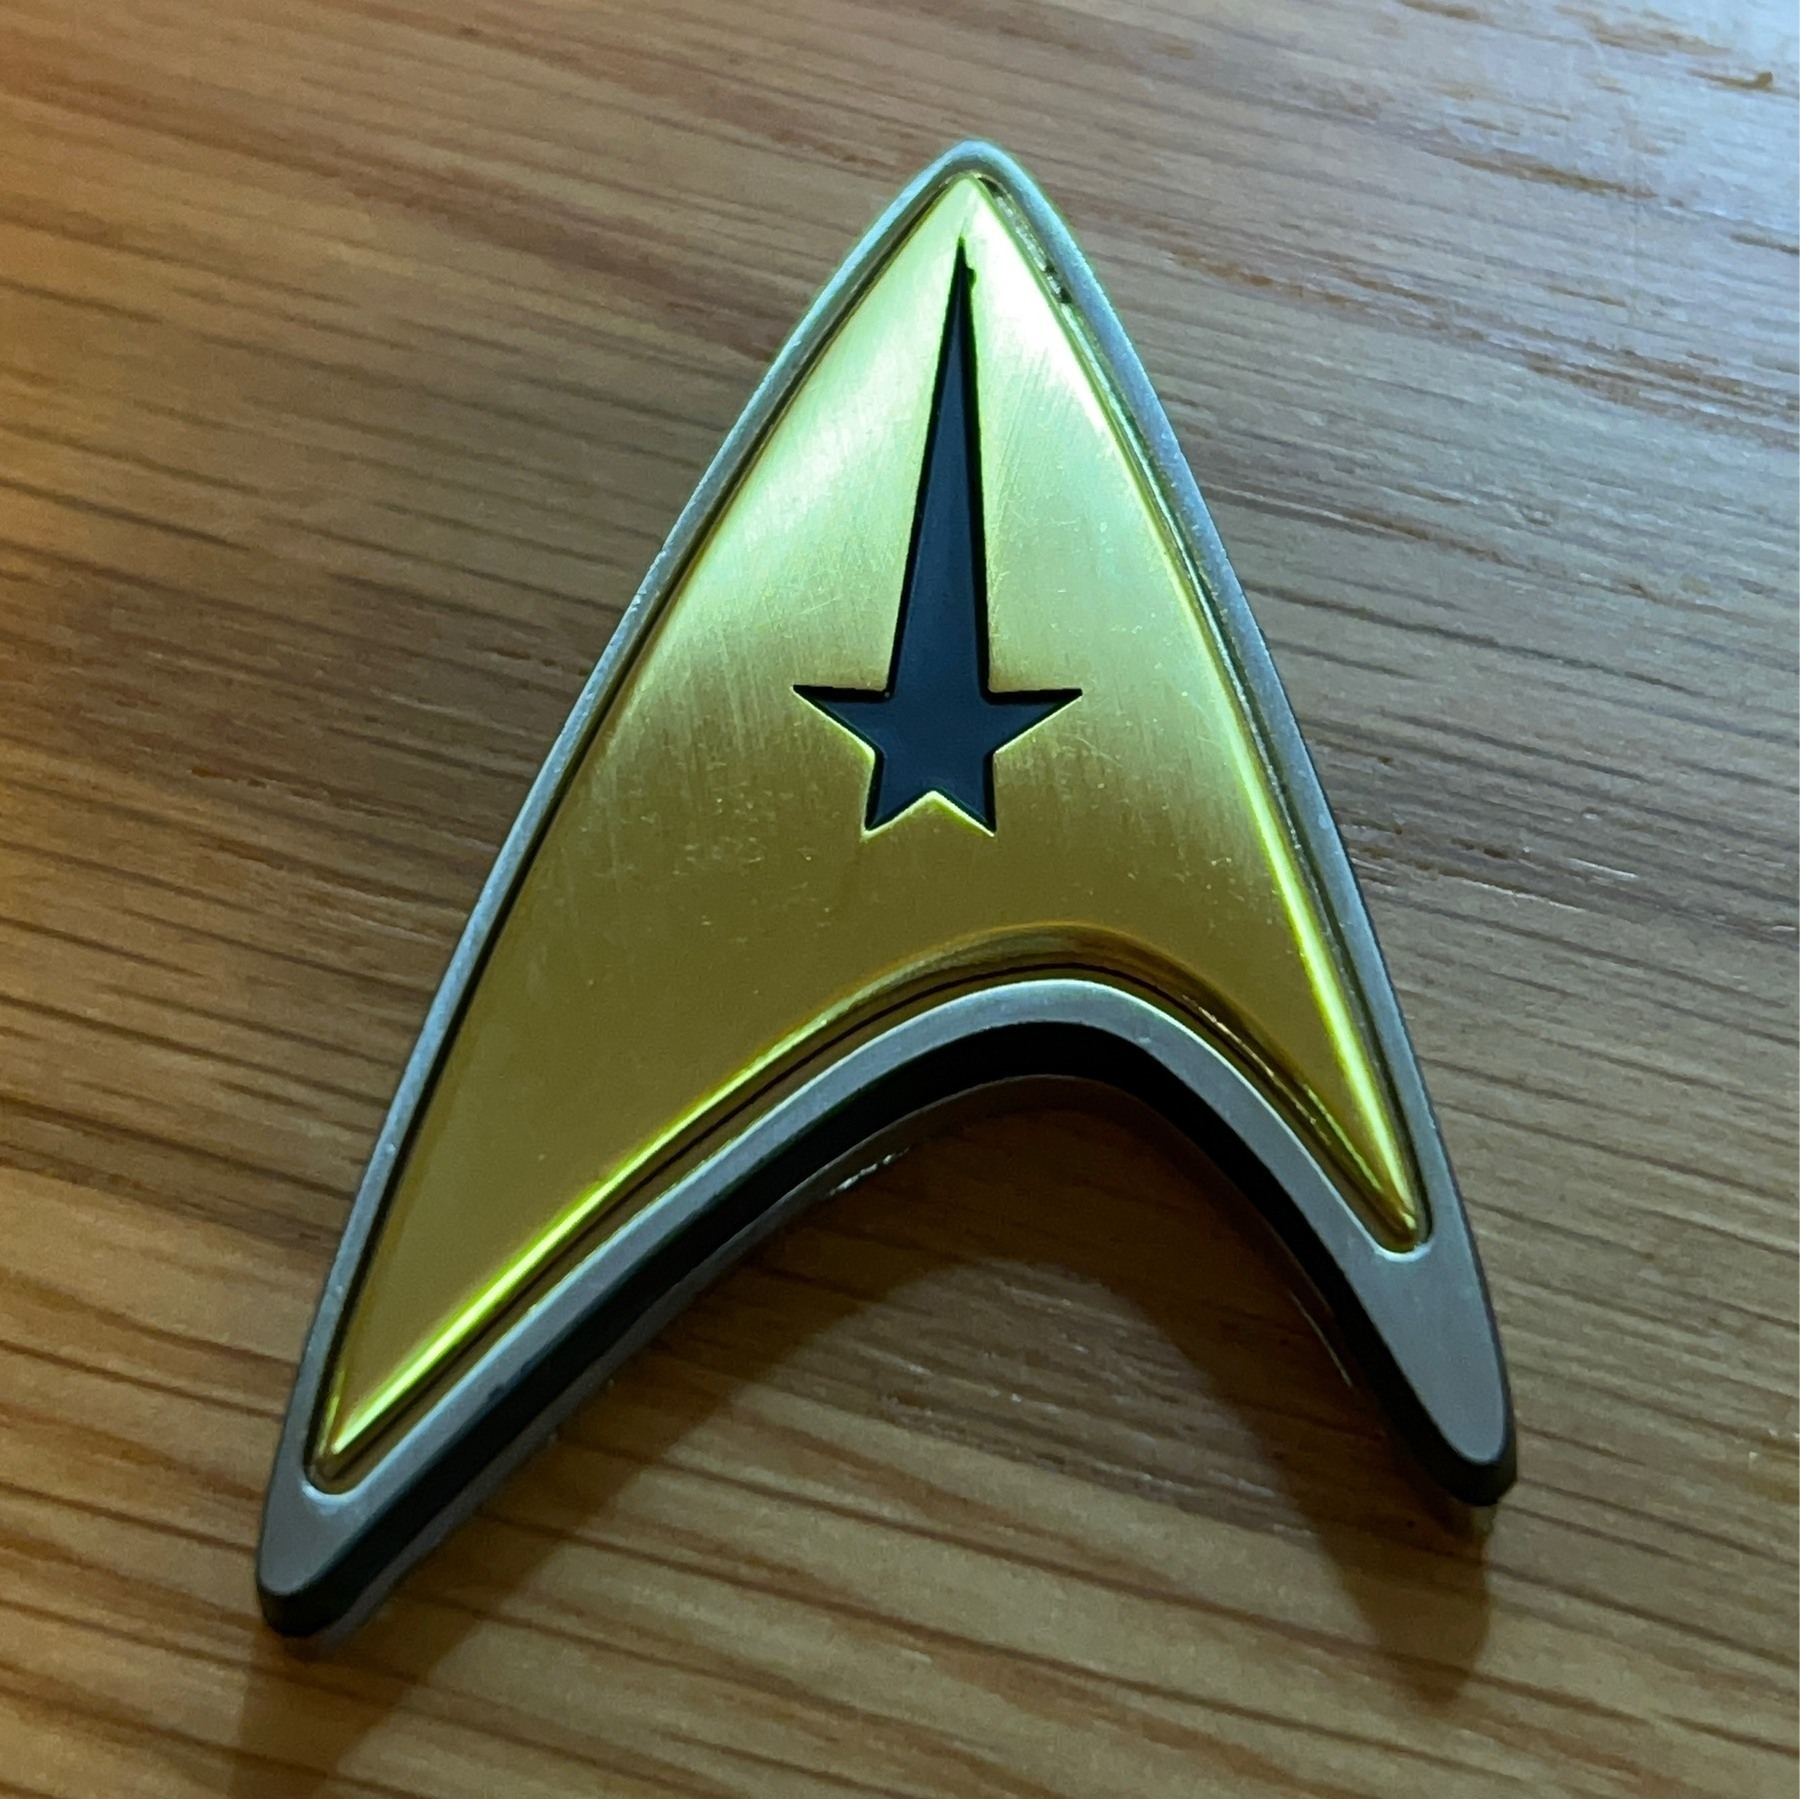 Star Trek: Strange New Worlds gold delta shaped metal command badge on a wooden table. 